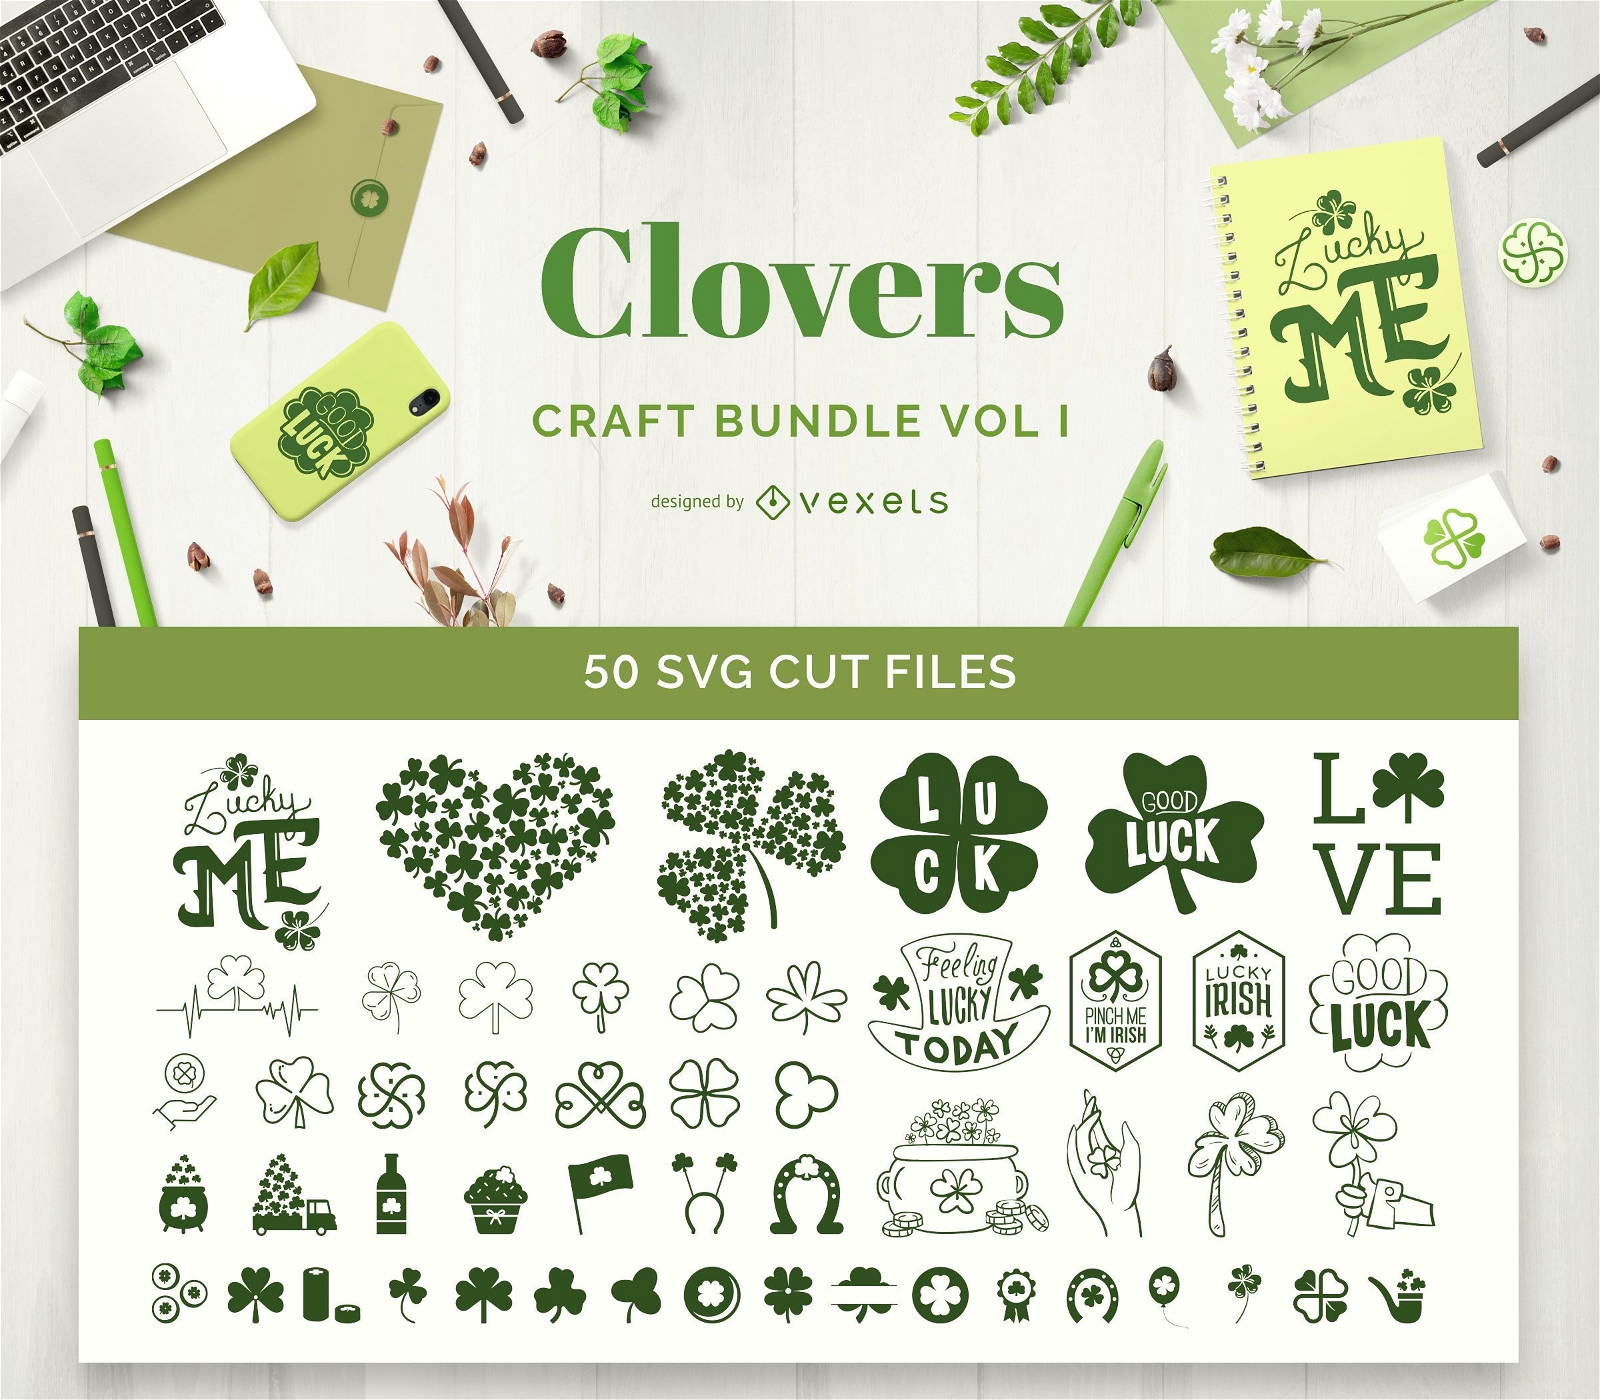 Clovers Craft Bundle Vol I.